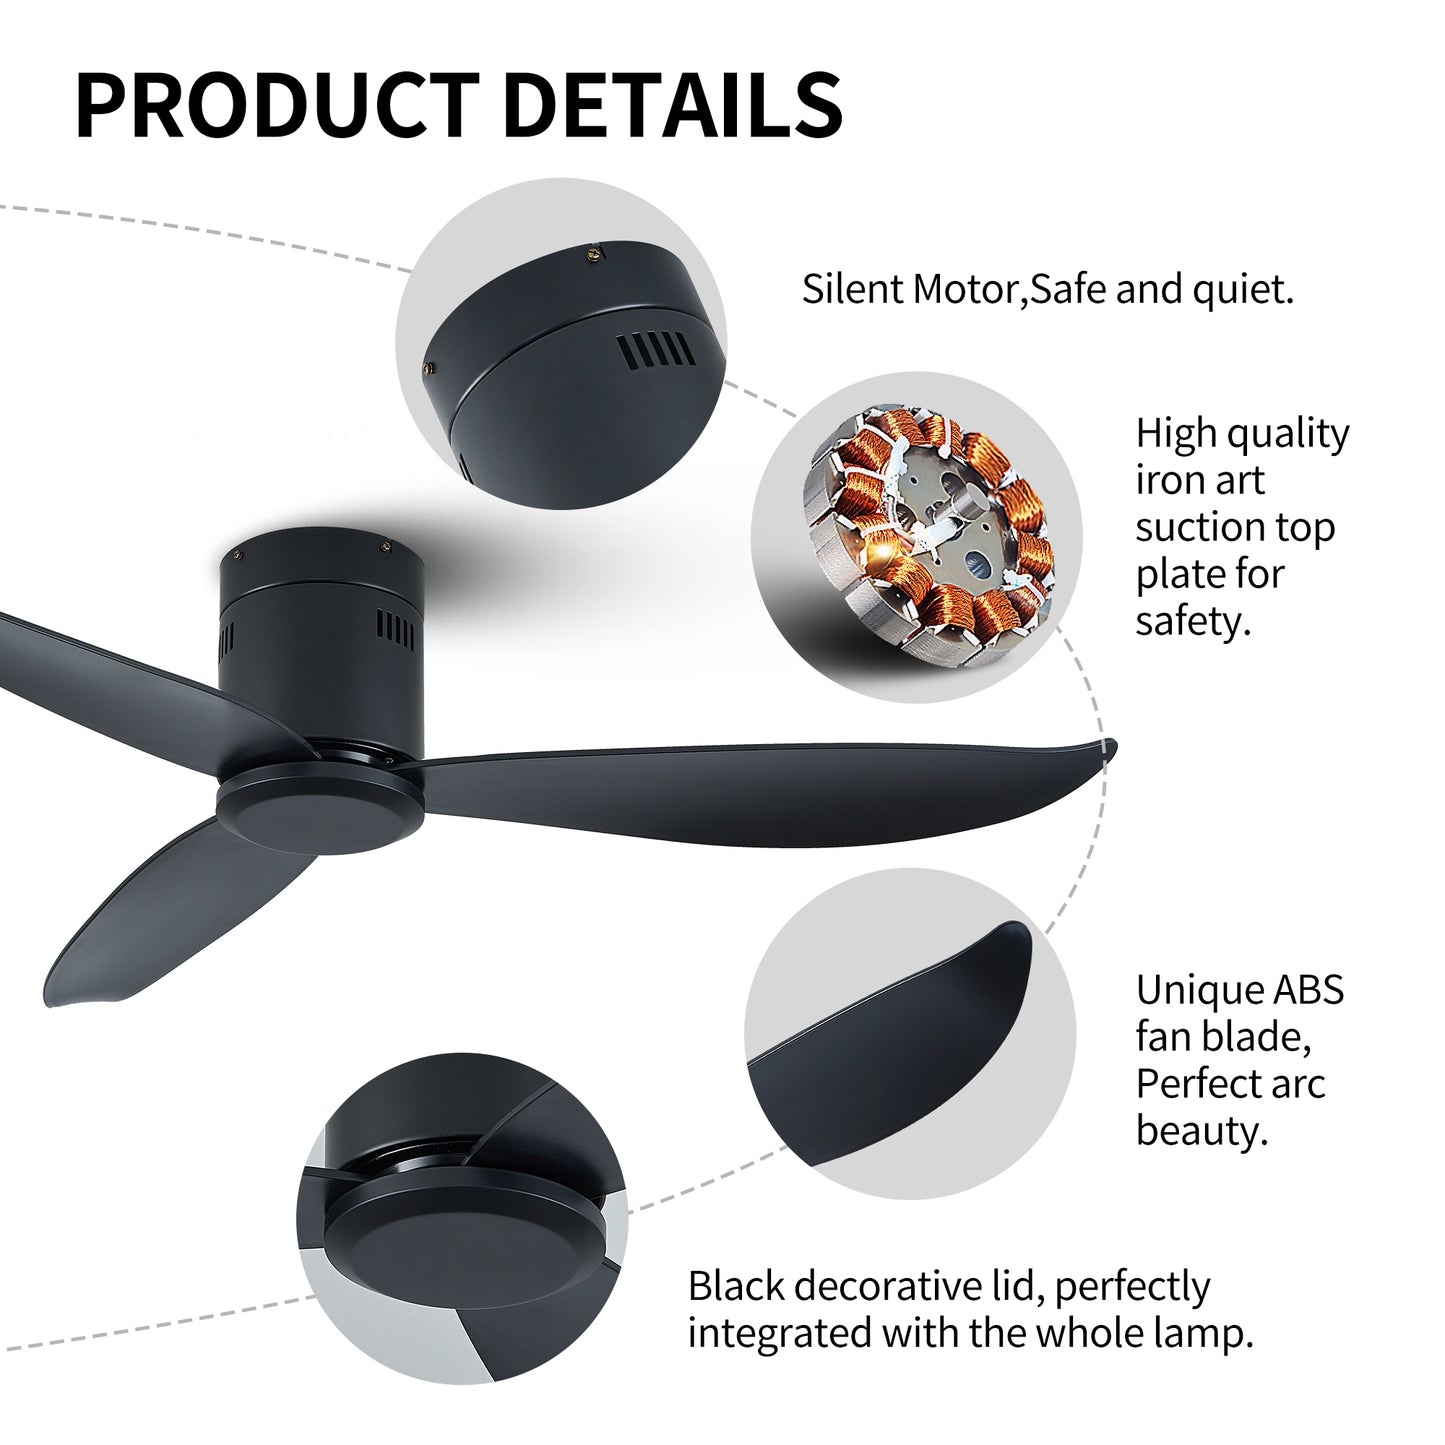 52 Matte Black Low Profile Ceiling Fan - Remote Controlled - Flush Mount, No Lights